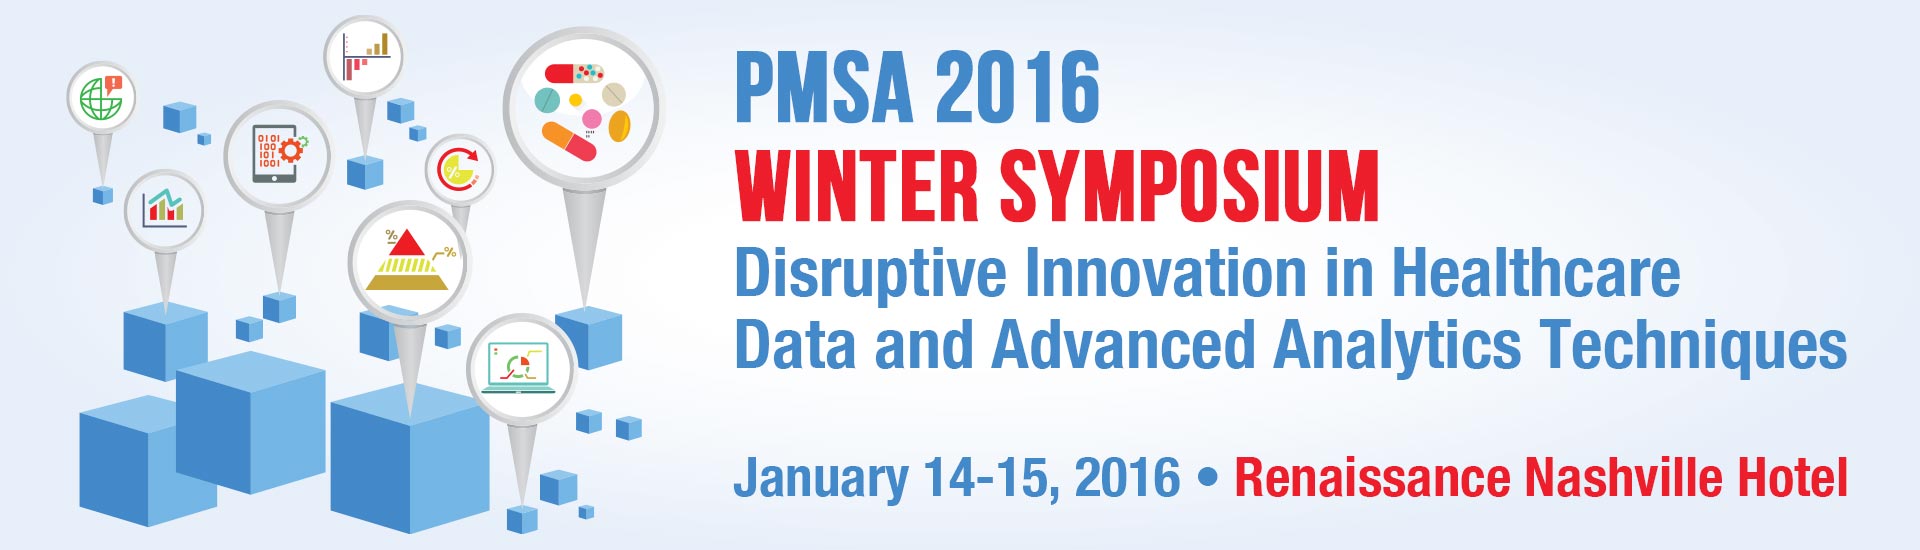 Winter Symposium • Nashville, Tennessee • January 14-15